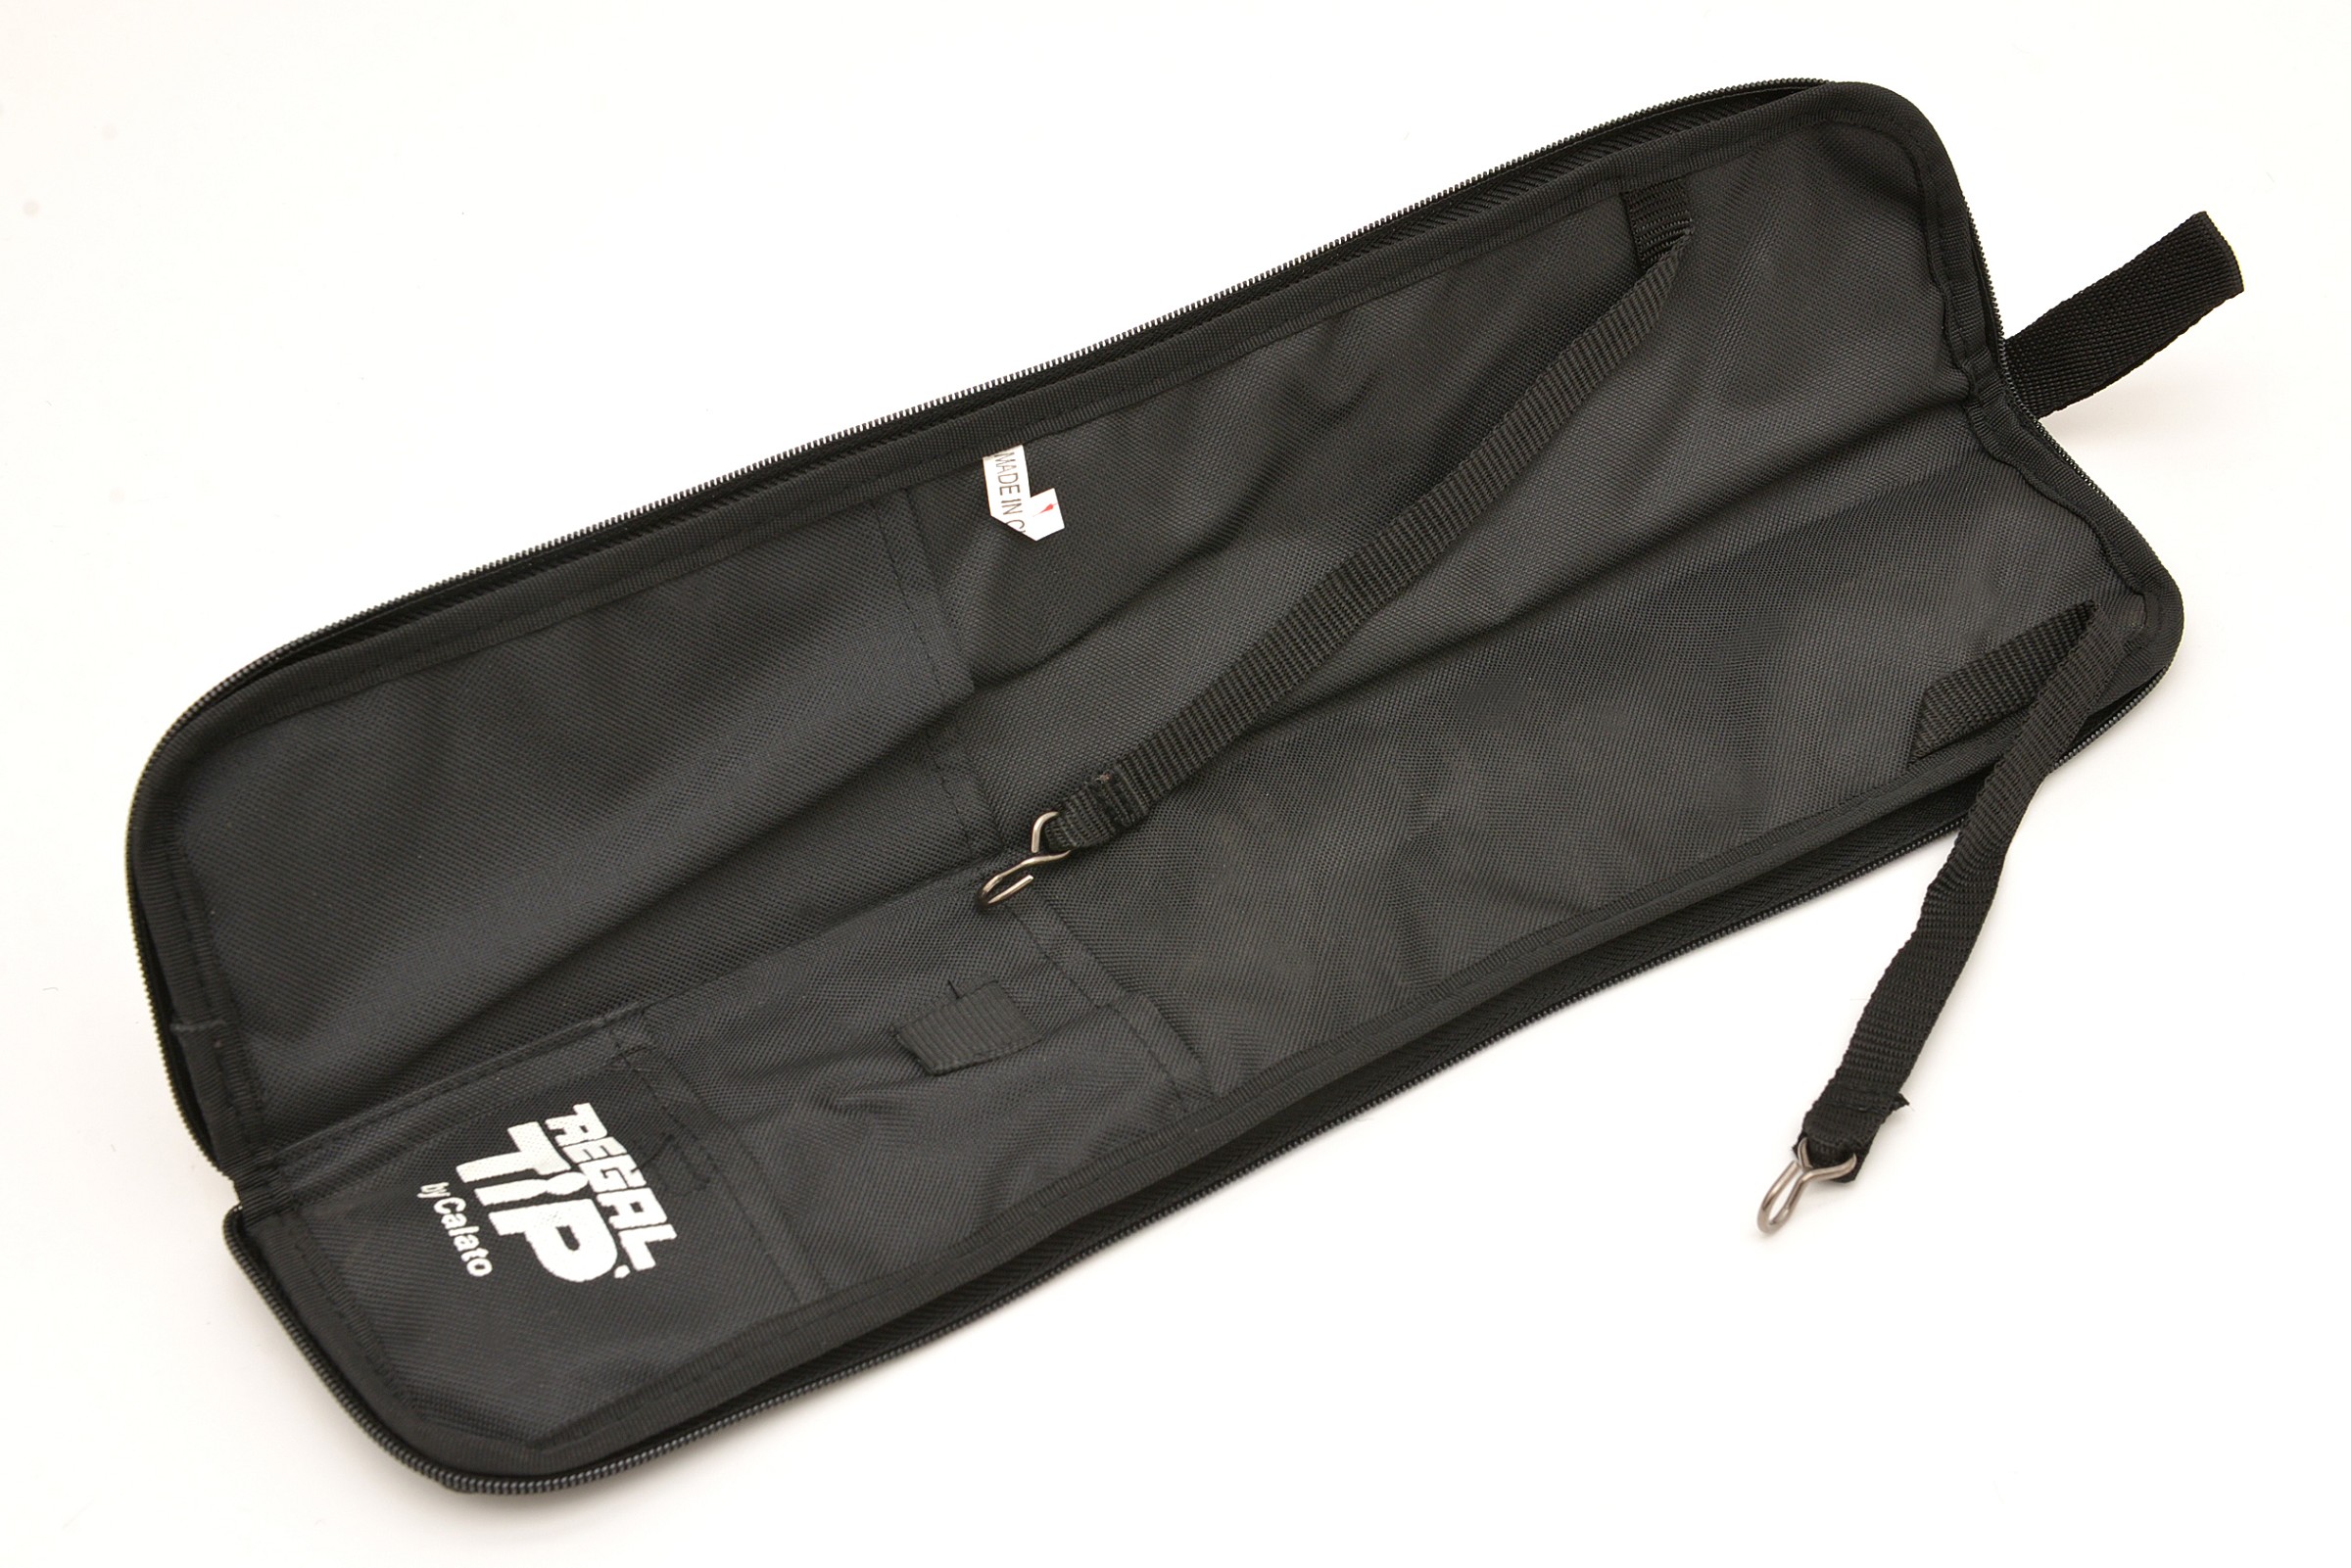 Regal Tip PR-380C FUNDAMENTAL STICK BAG Accessoires